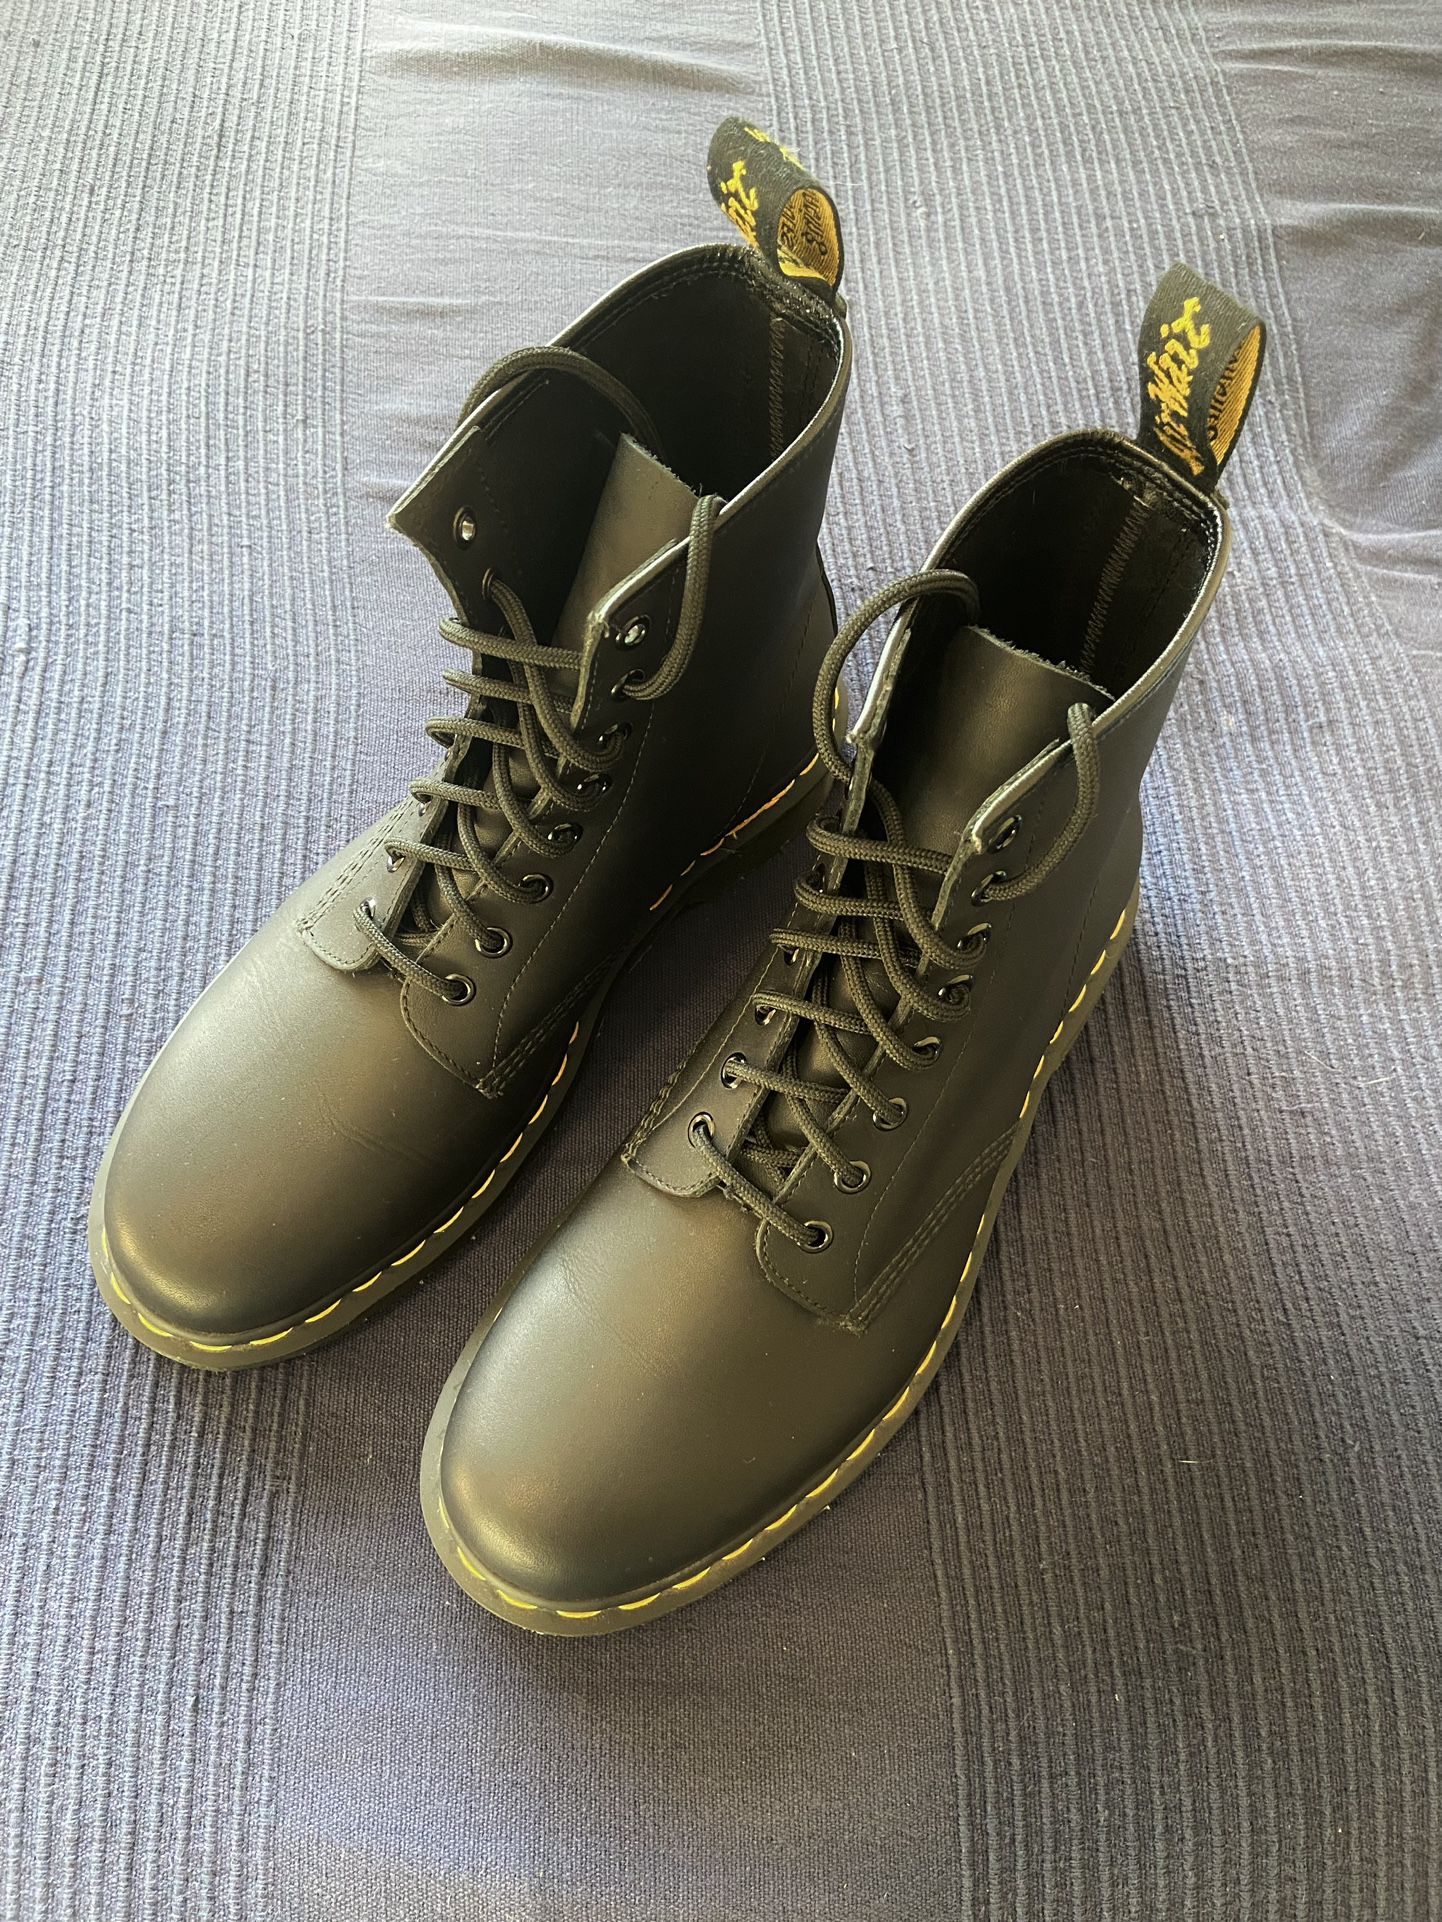 Dr. Martens Boot - Size 10M/11W/43EU